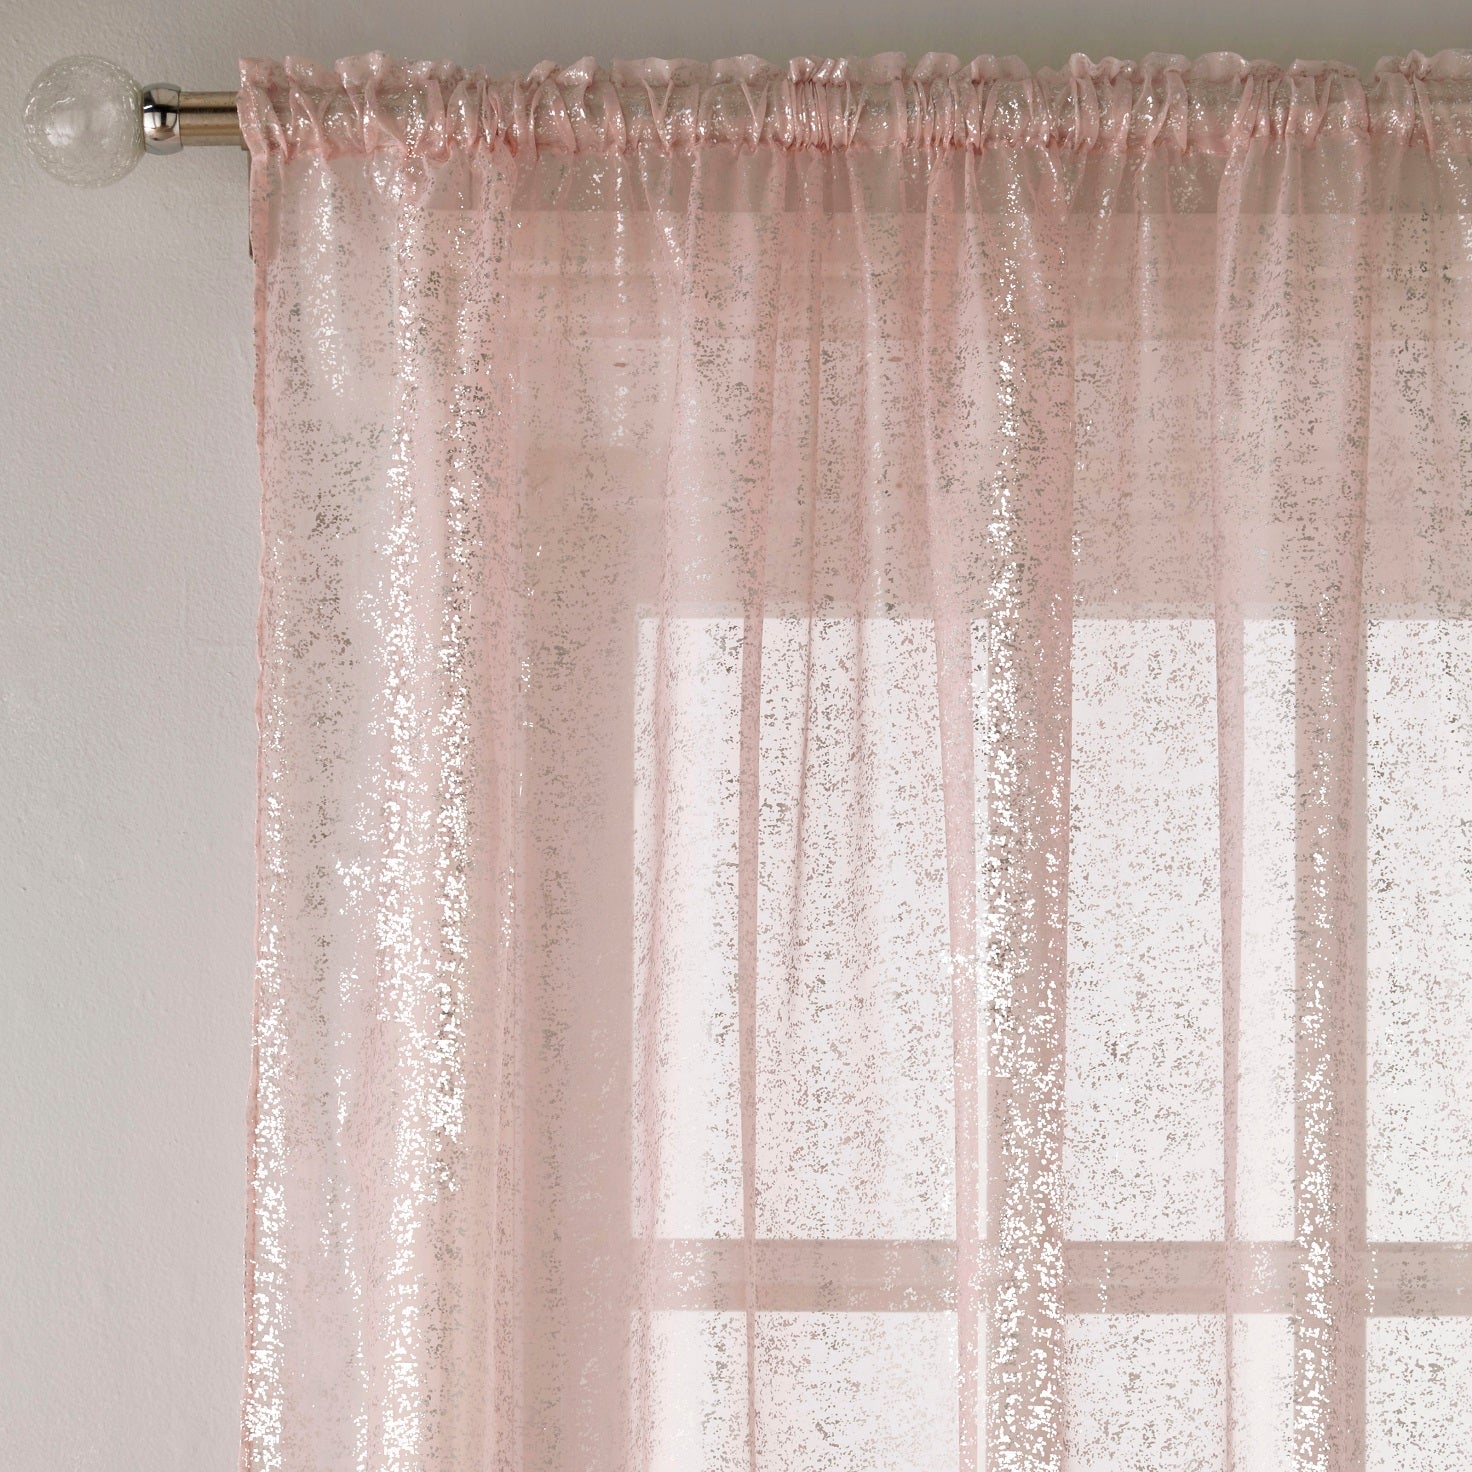 55x72" Pandora Voile Net Curtains Panel - Blush Pink & Silver